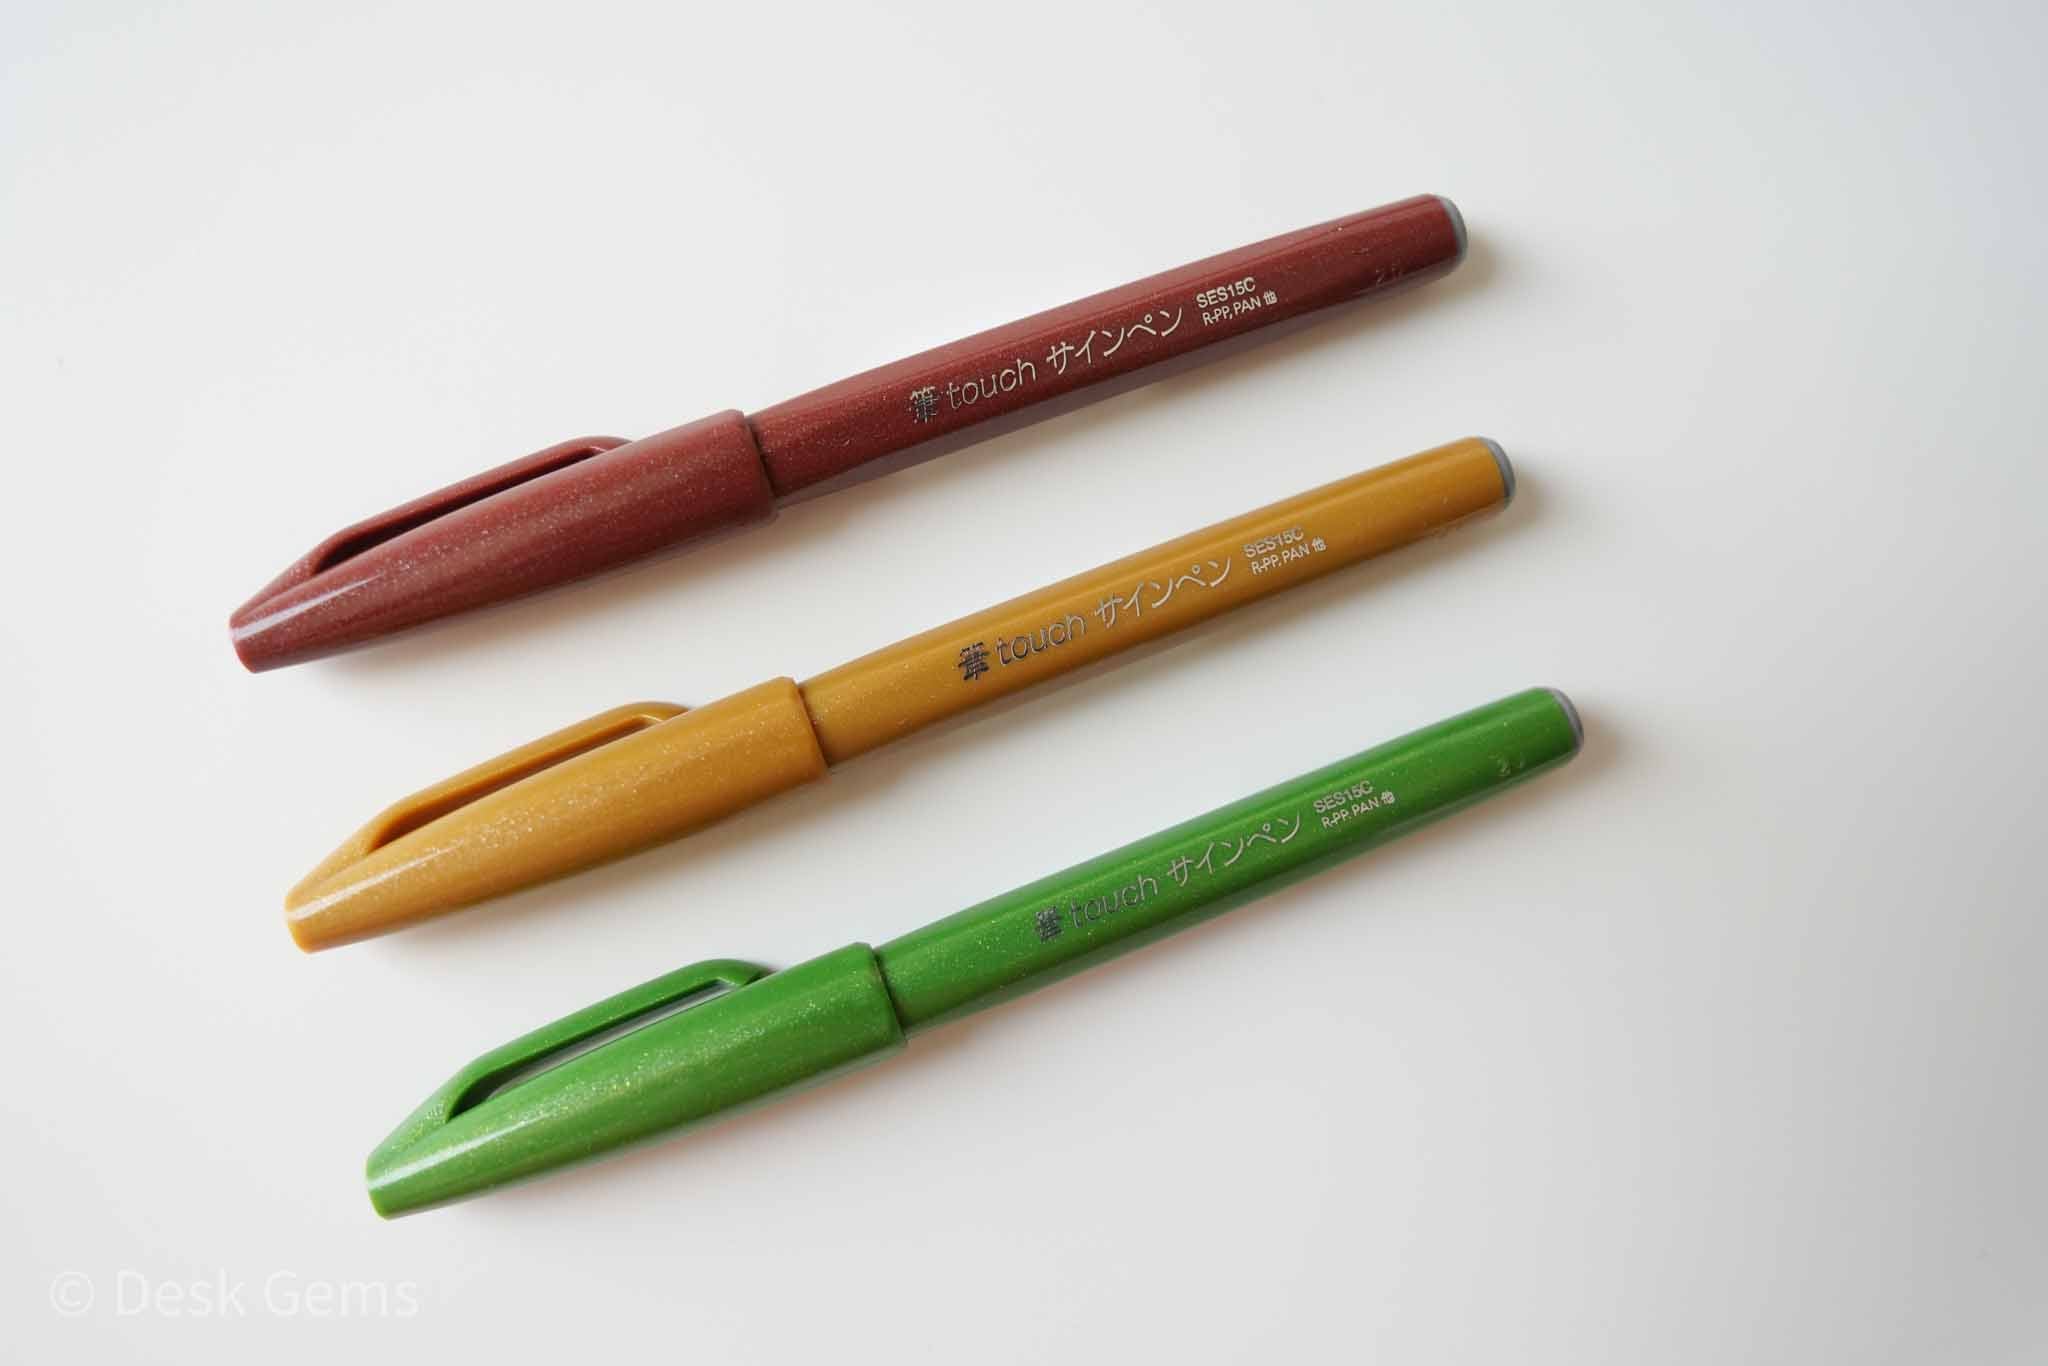 Pentel Fude Touch Brush Sign Pen - Violet